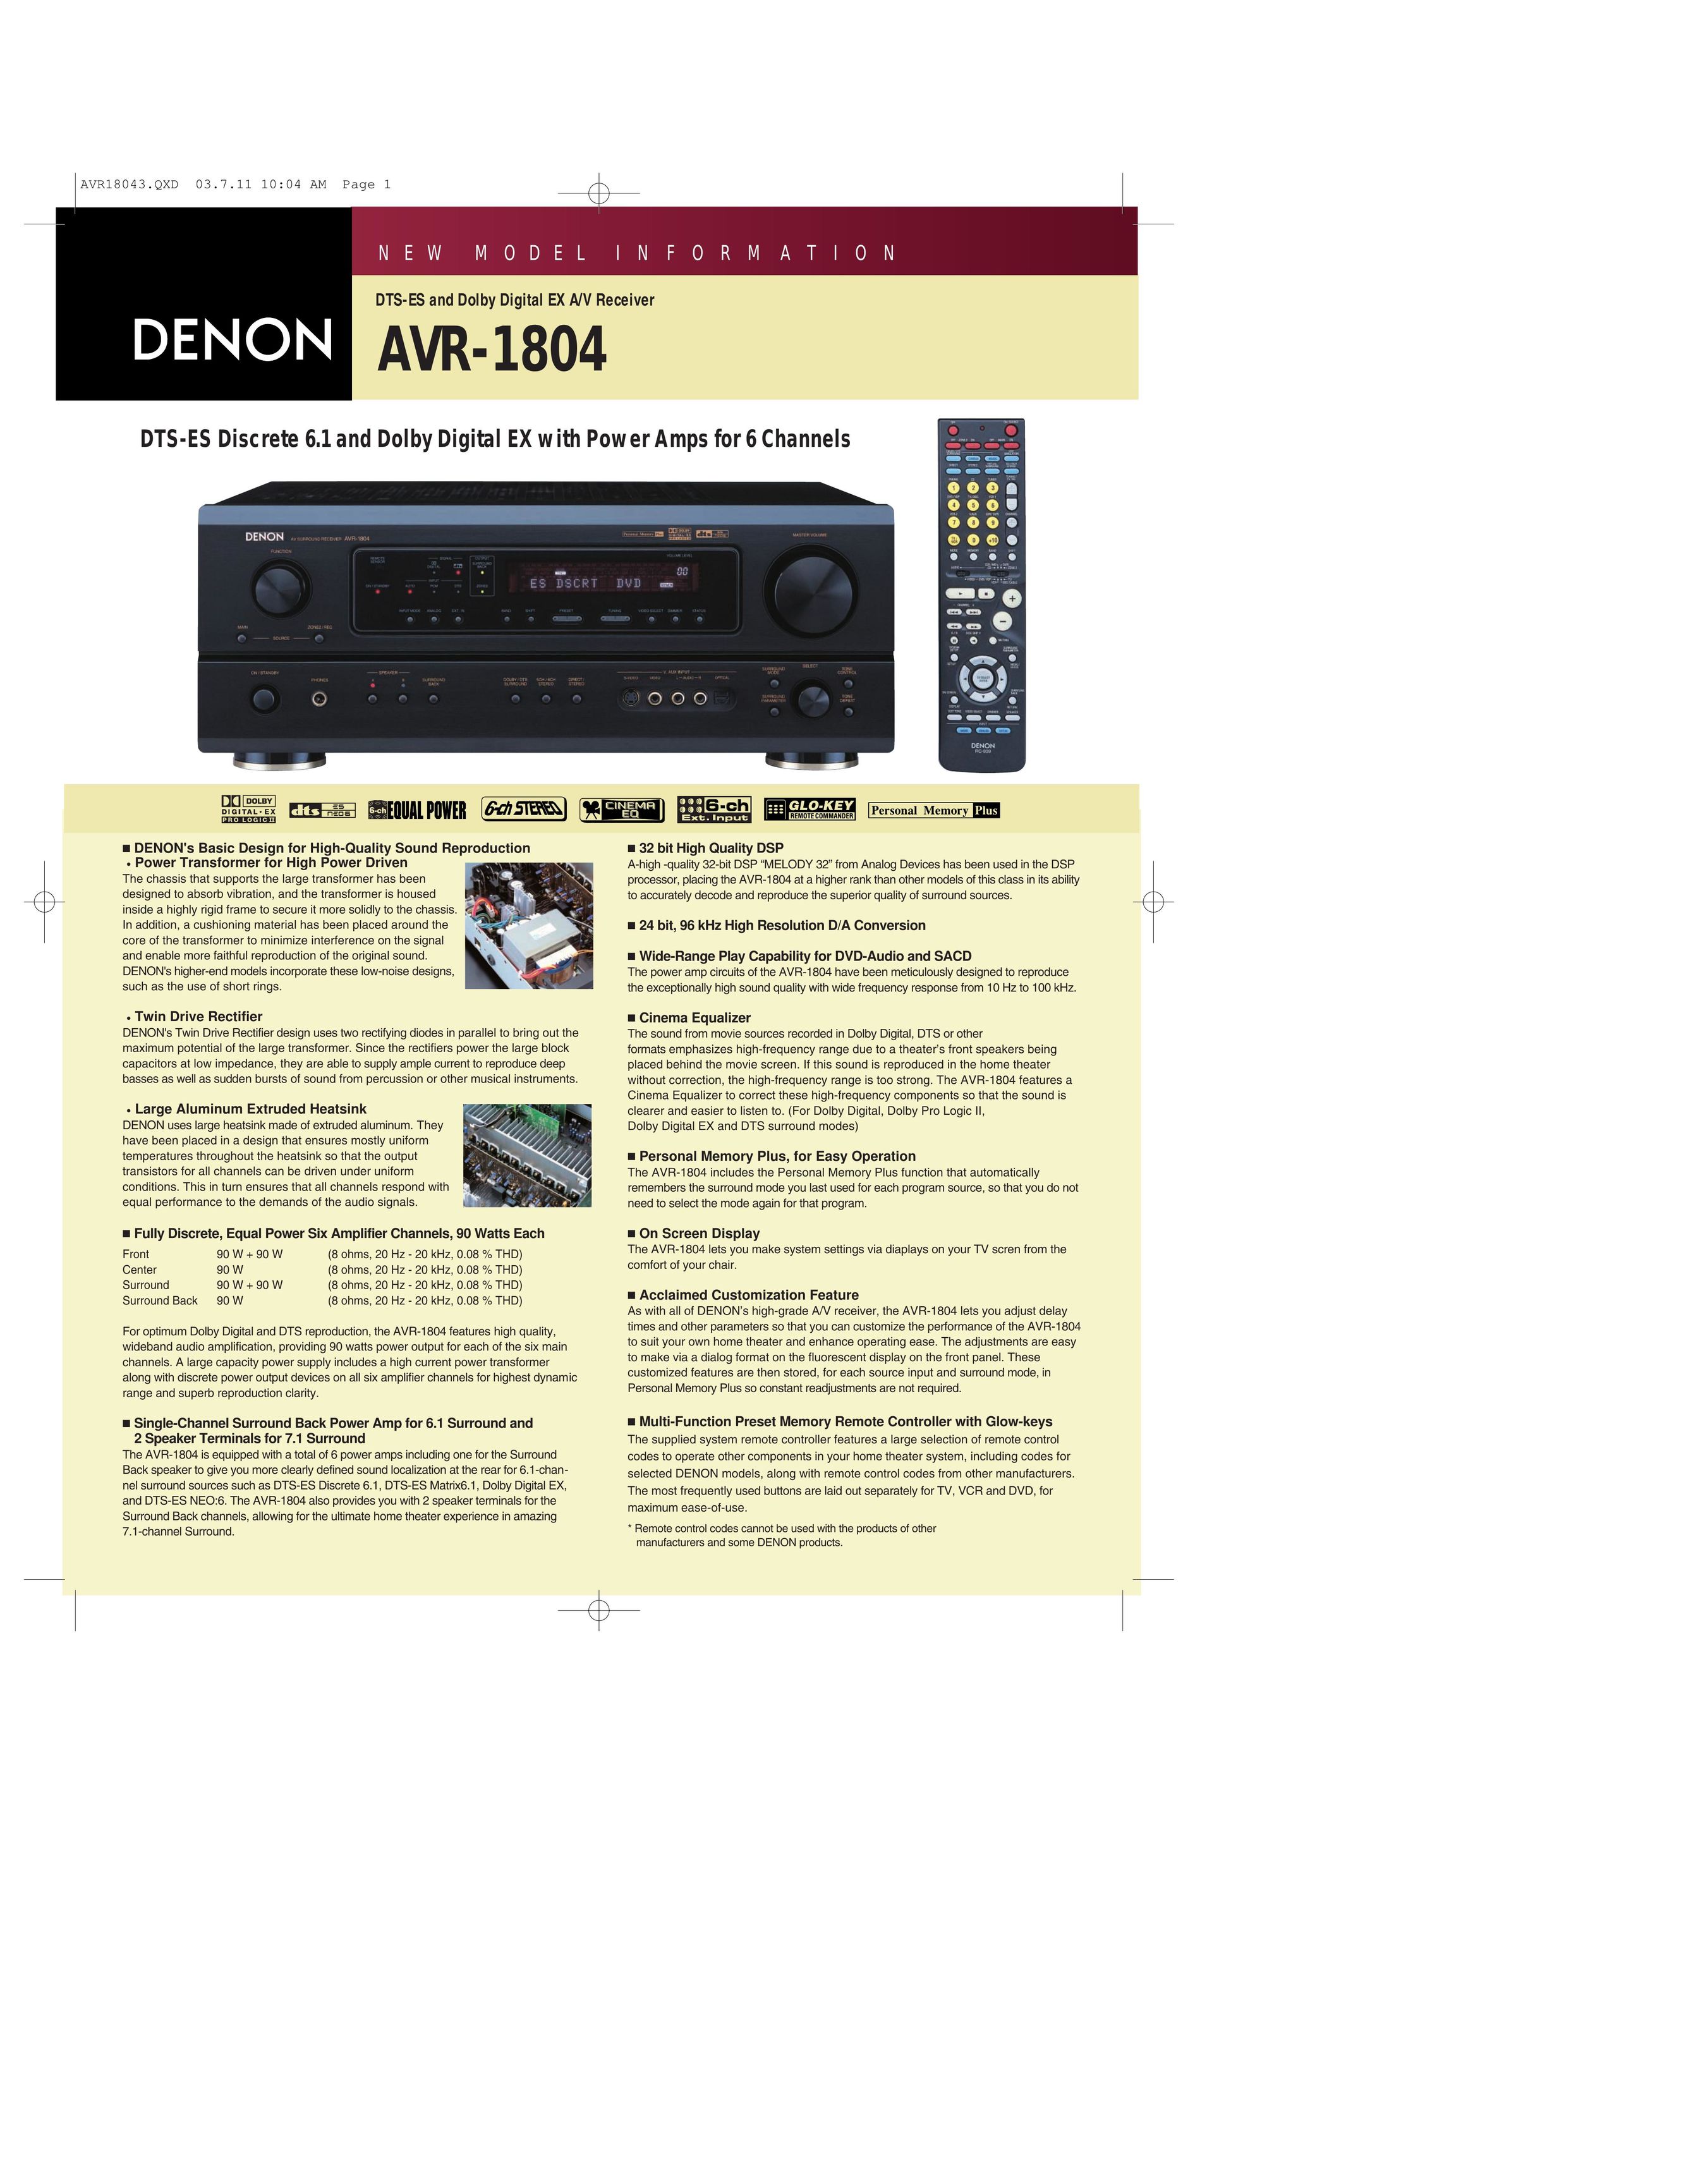 Denon AVR-1804 Stereo System User Manual